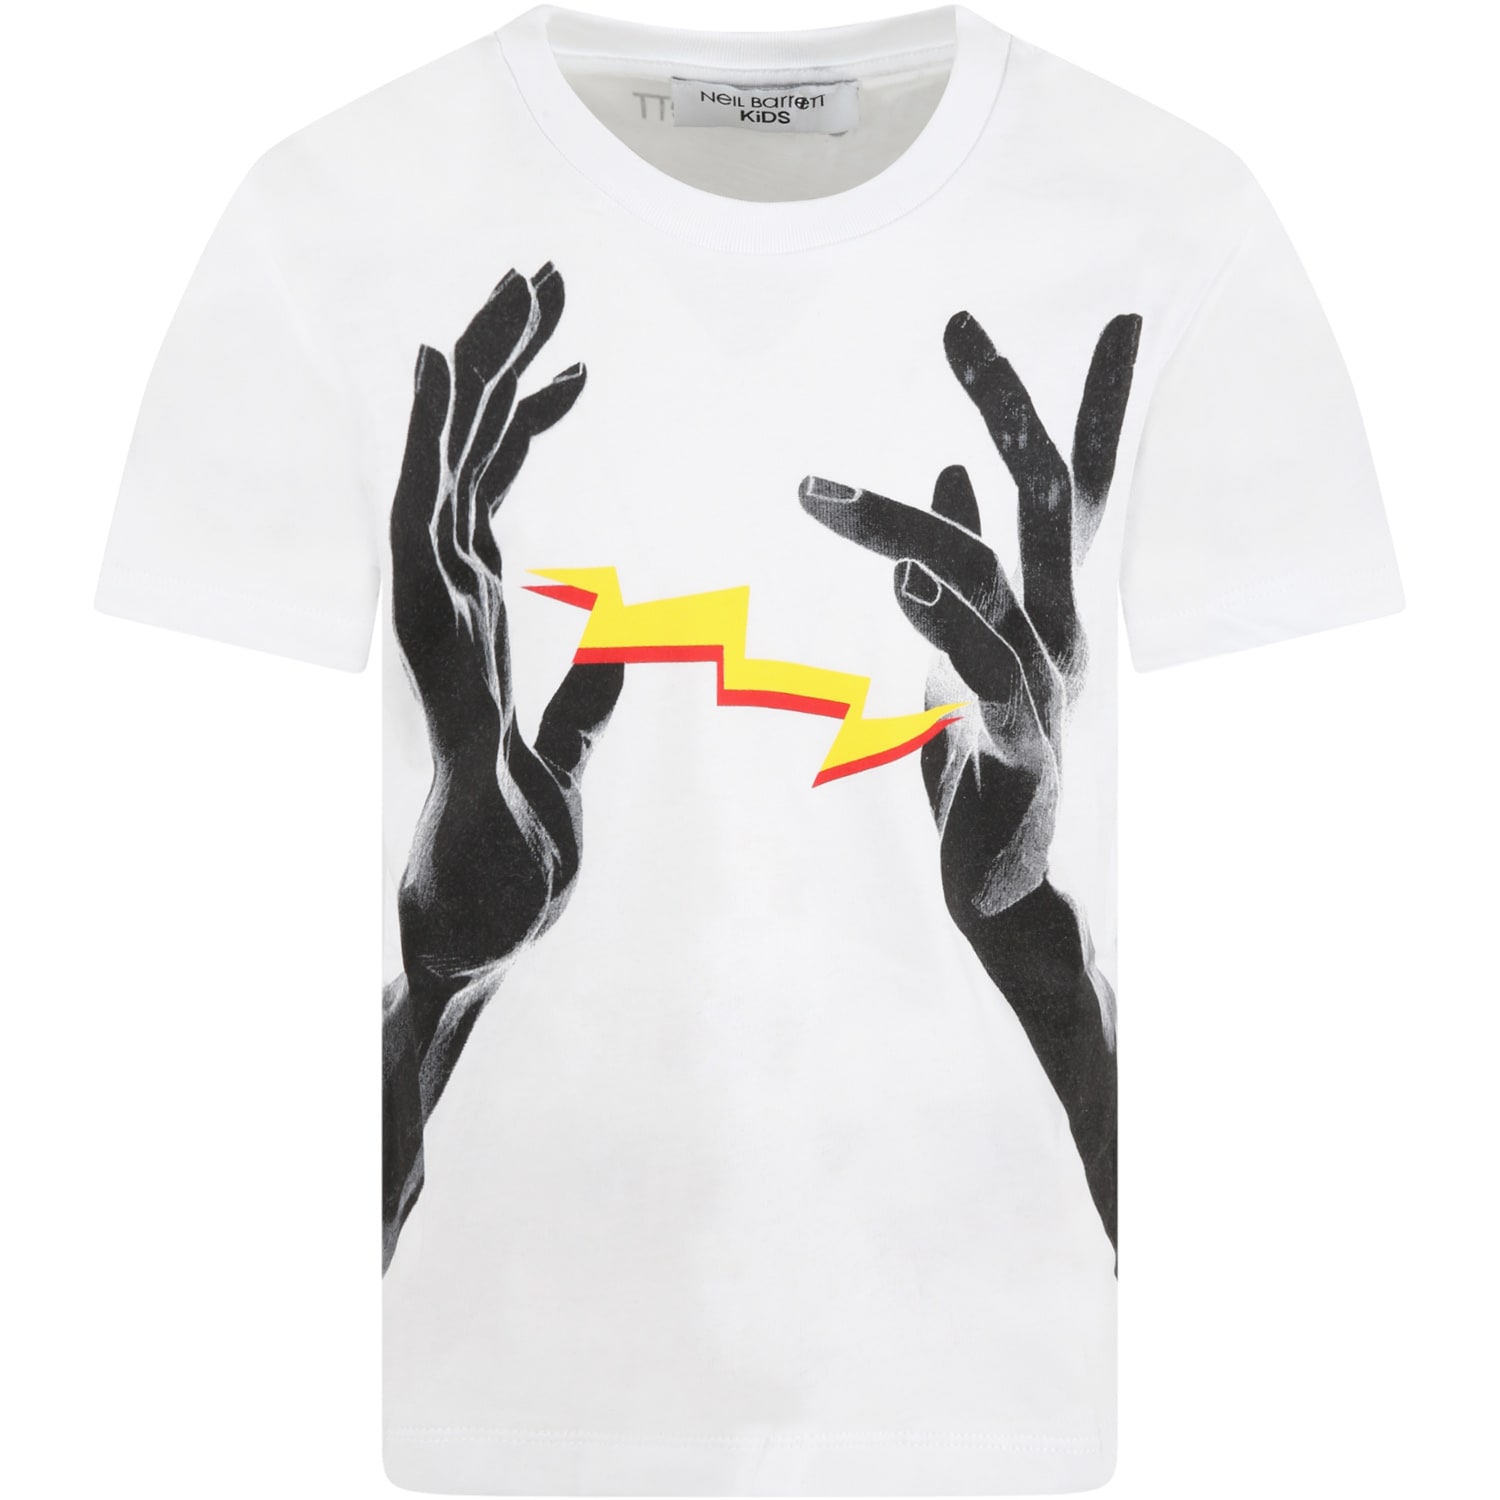 Neil Barrett White T-shirt For Boy With Hands